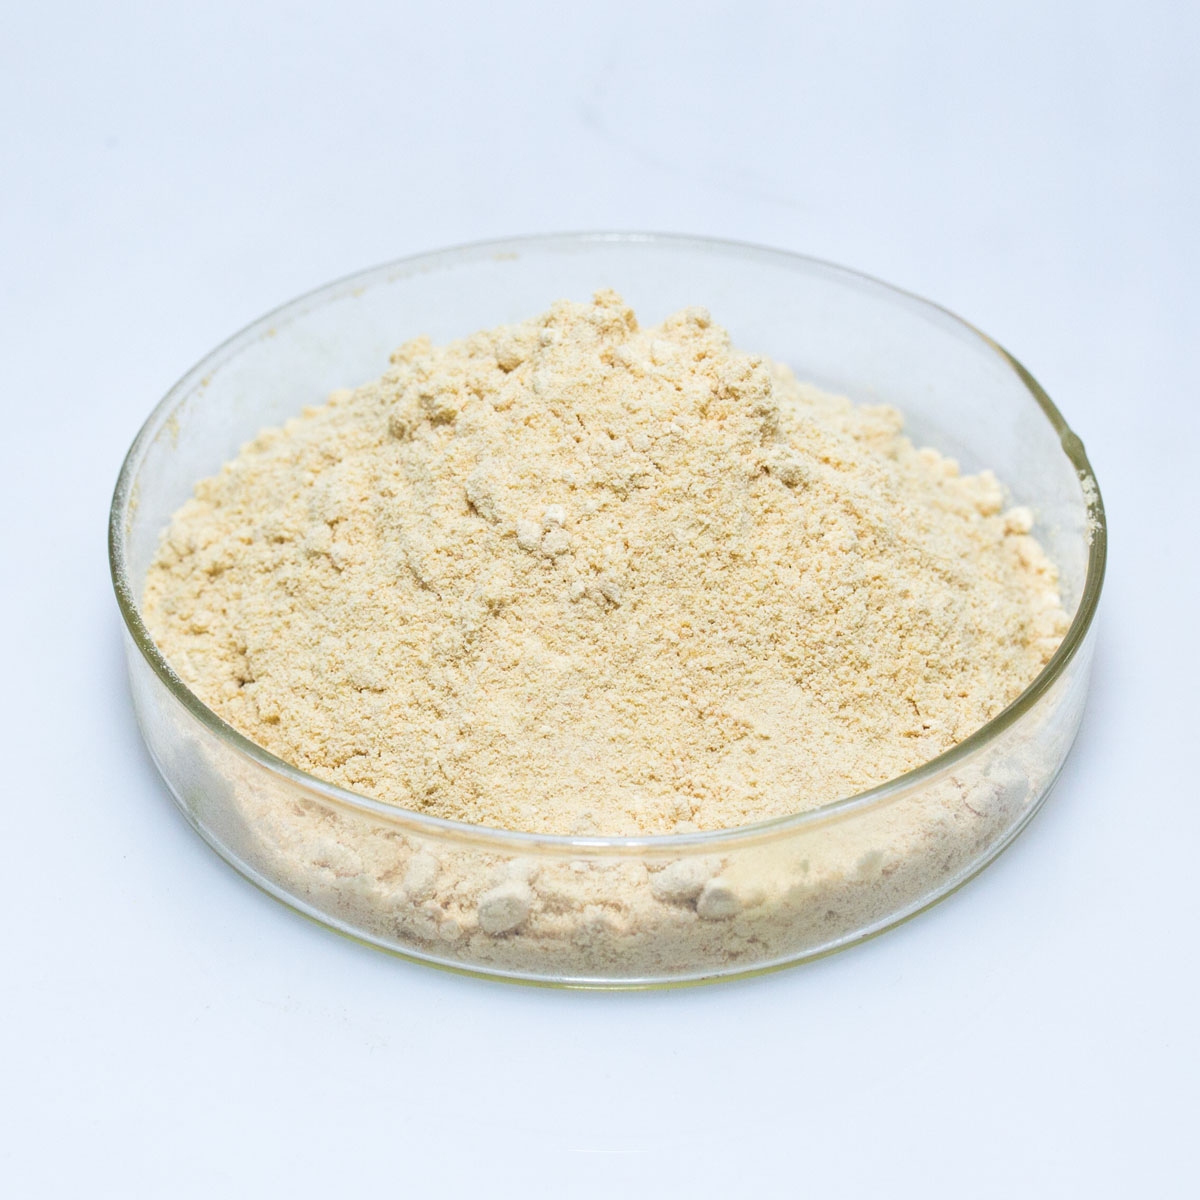 Selenium-enriched malt powder